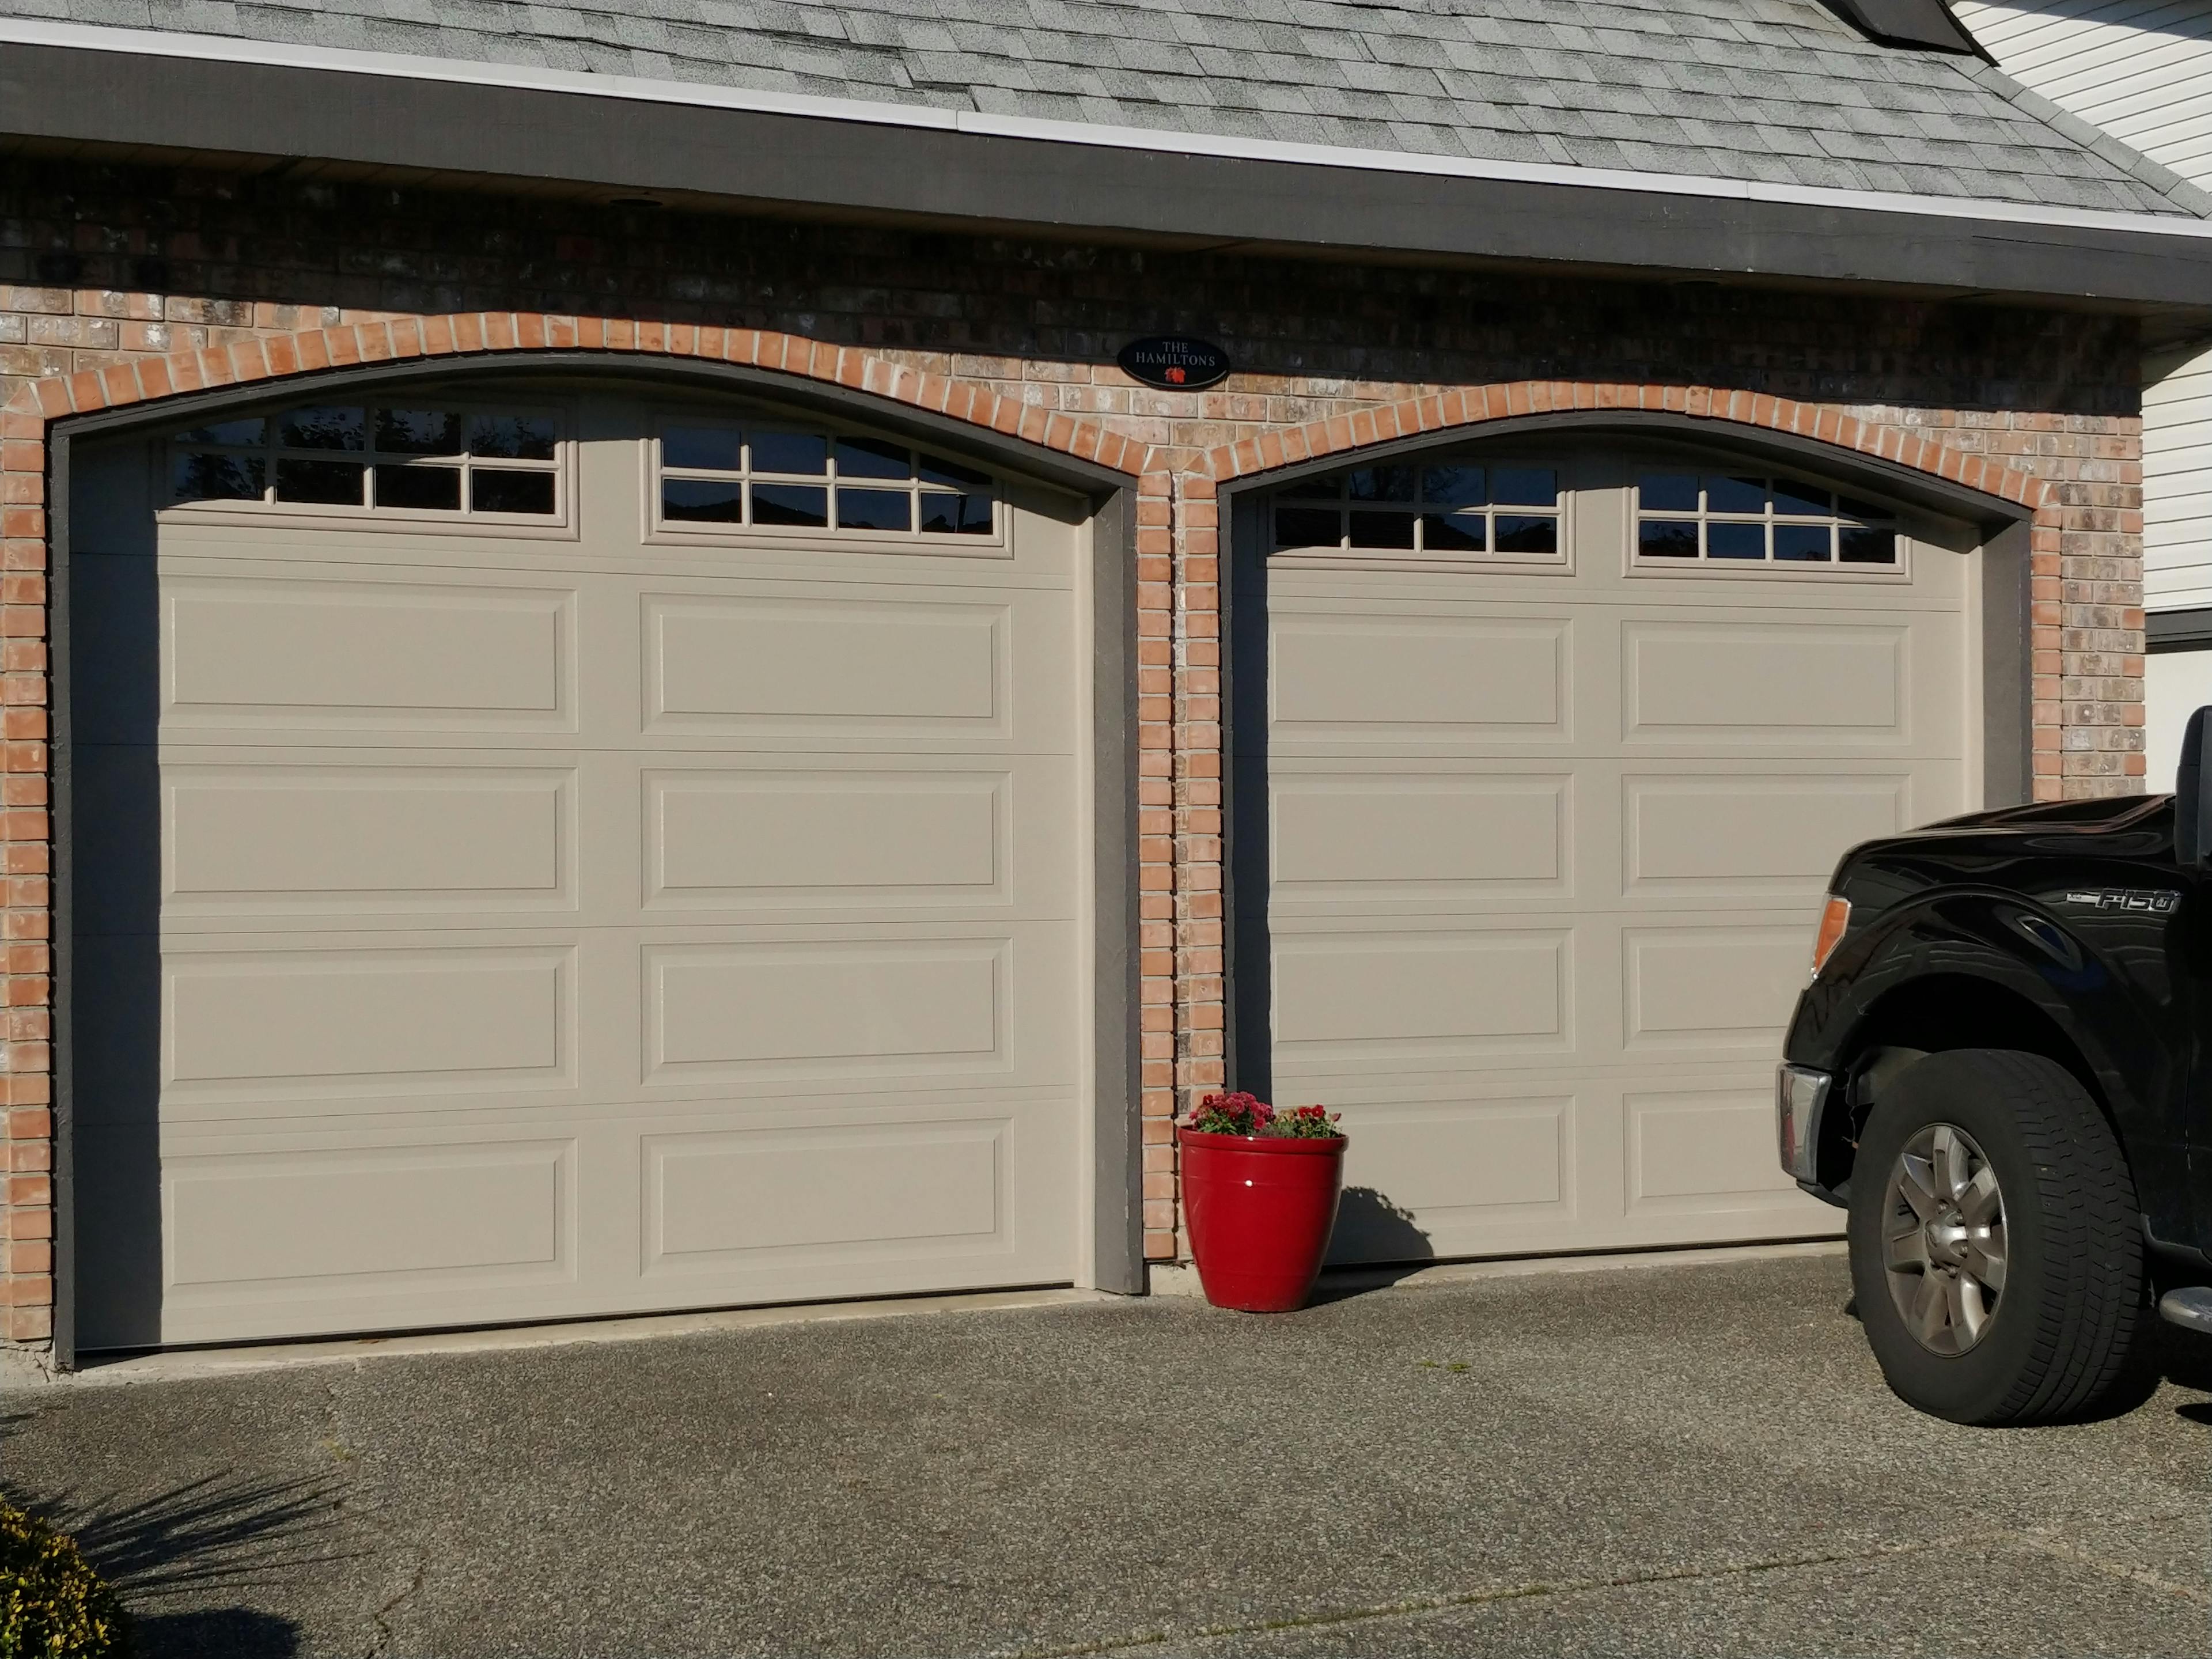 Matching white garage doors